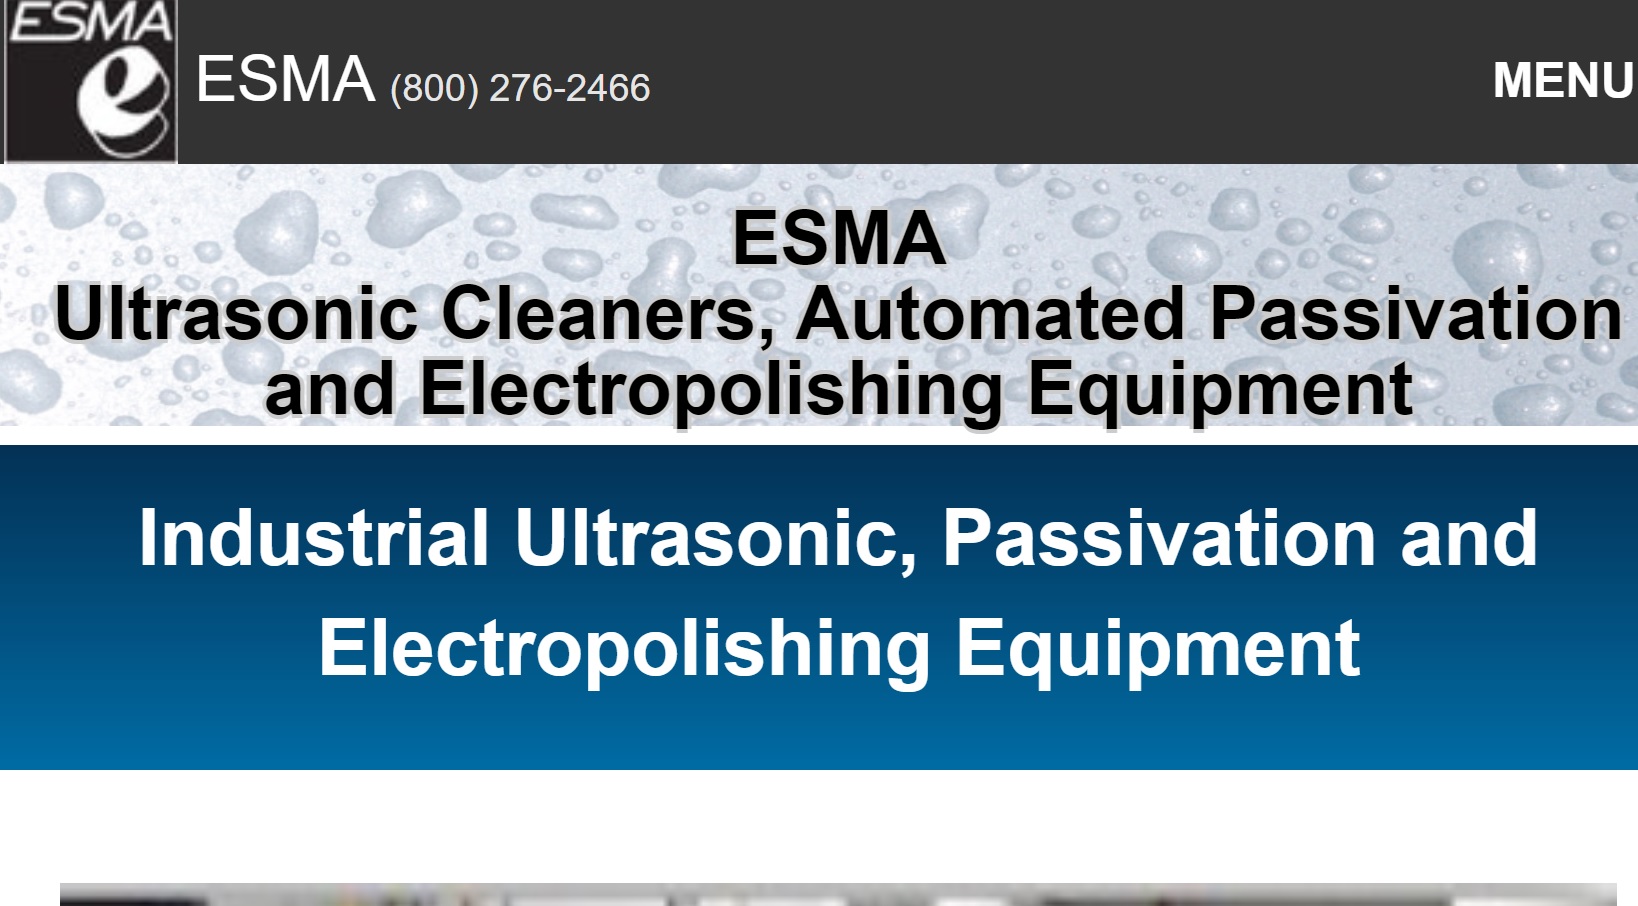 ESMA, Inc.